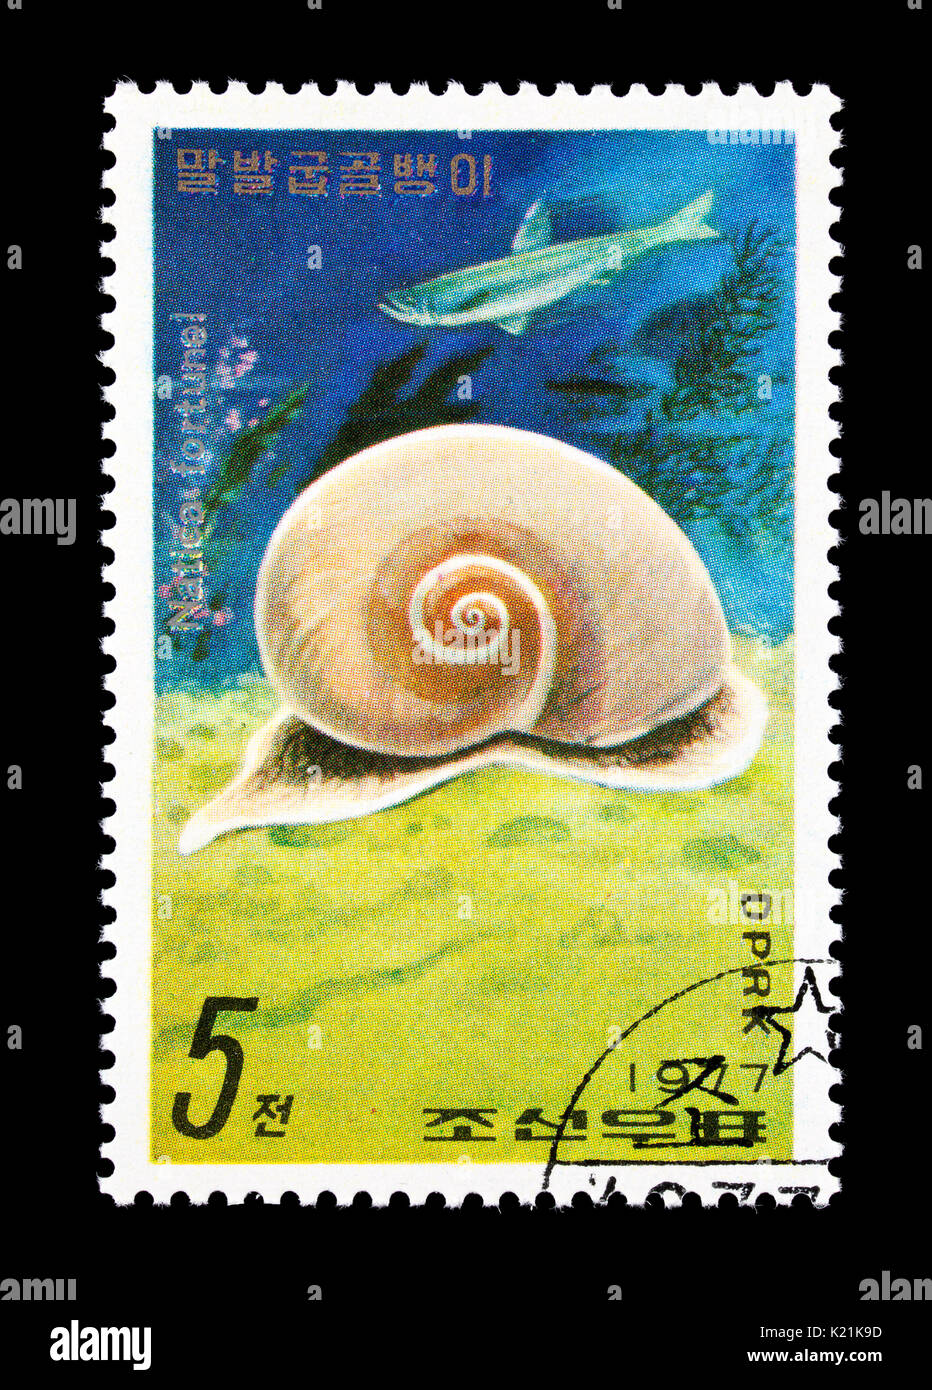 Postage stamp from North Korea depicting a predatory sea snail (Laguncula pulchella) Stock Photo